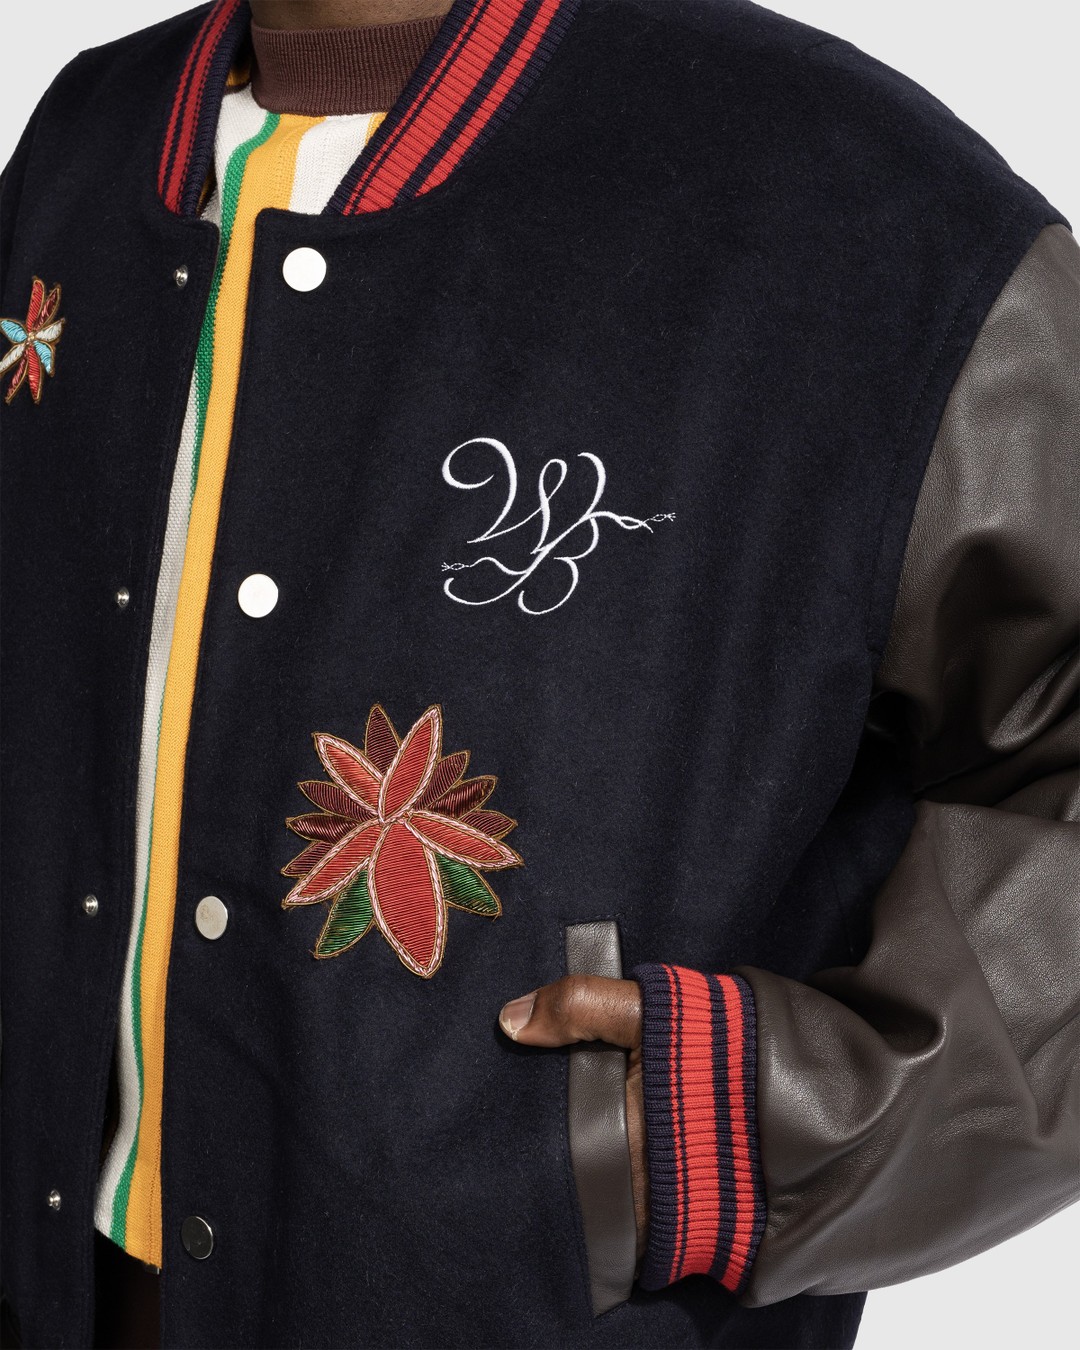 Wales Bonner – Ascend Varsity Jacket - Outerwear - Brown - Image 5